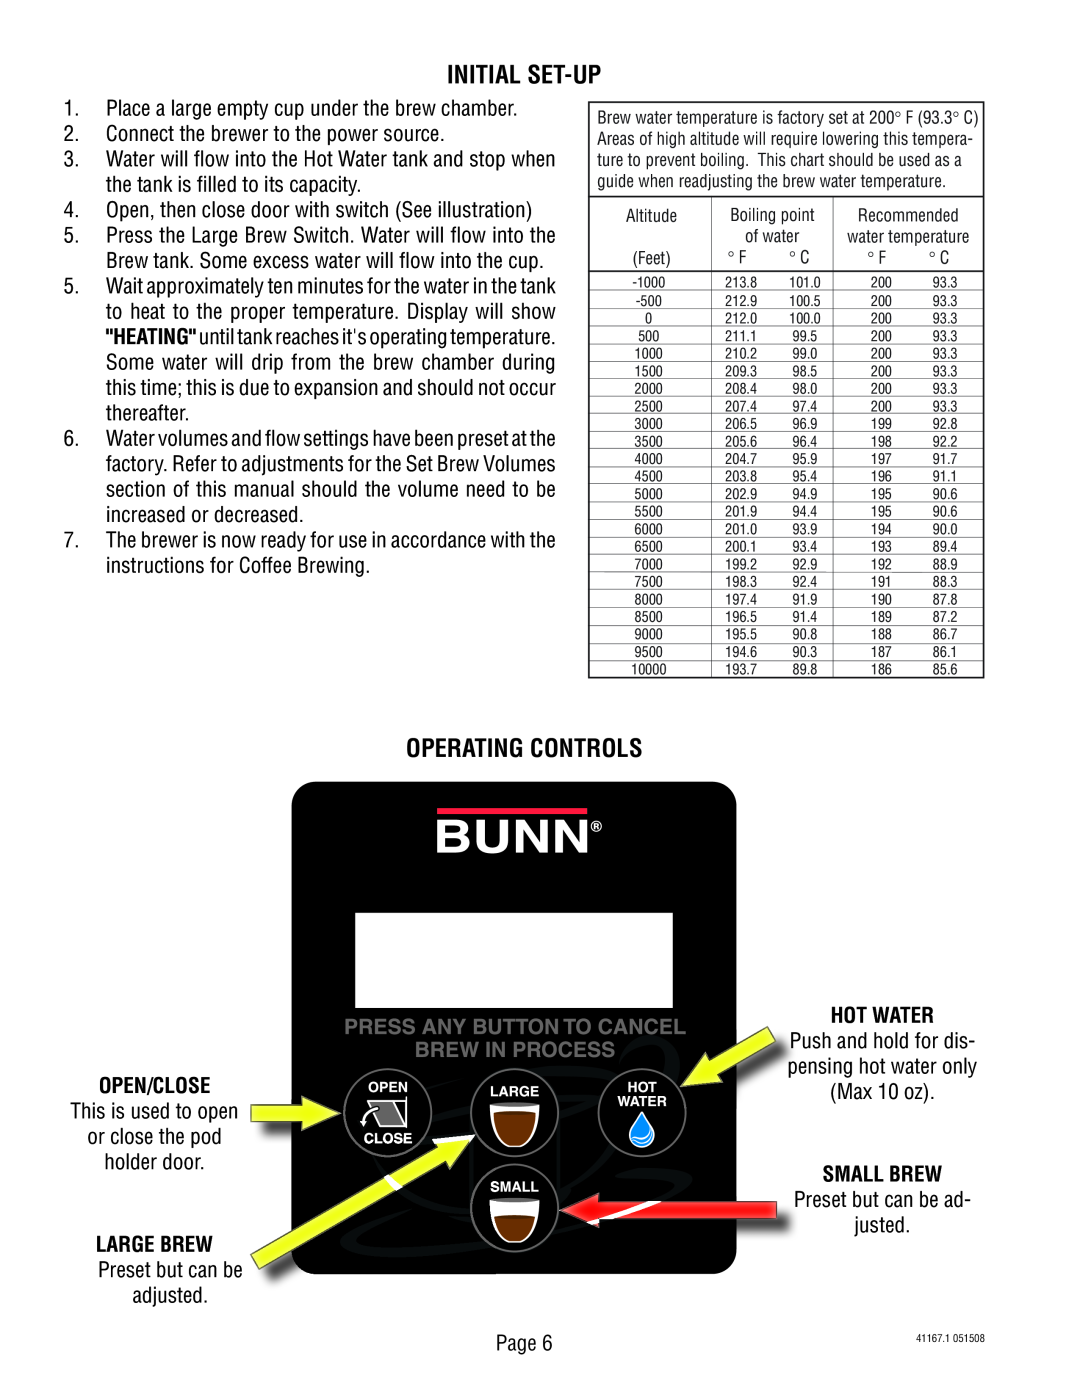 Bunn 41167.0001B service manual Initial Set-Up, Operating Controls, Open/Close, Hot Water, Small Brew 